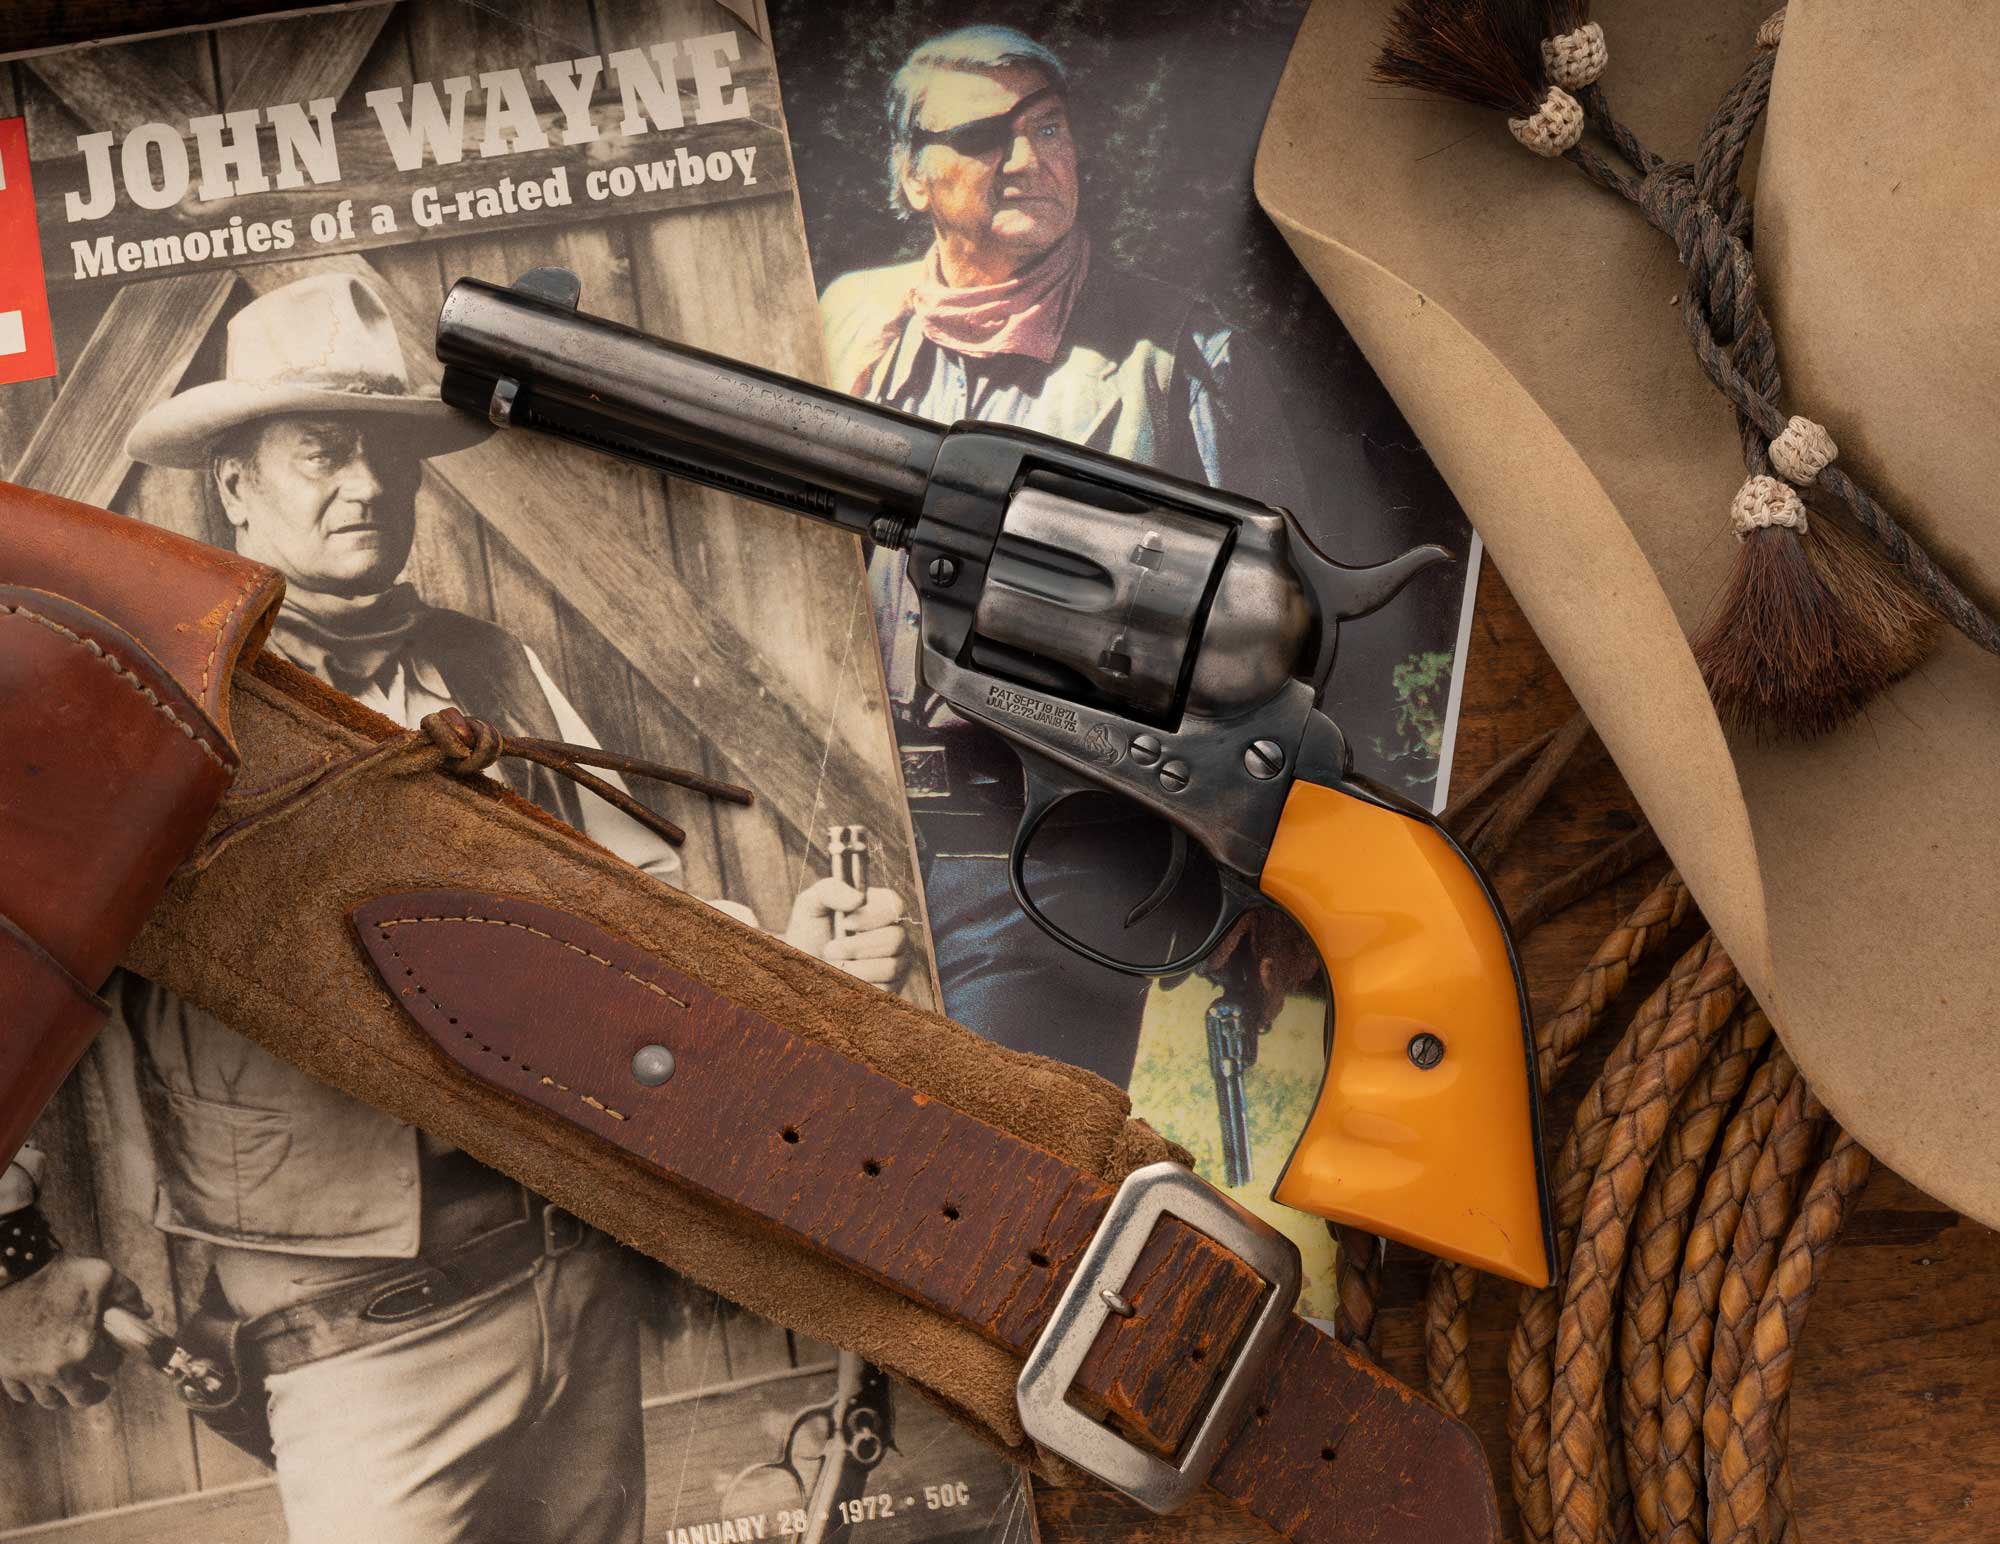 [Press Release] John Wayne's "True Grit" Colt Revolver Comes to Auction